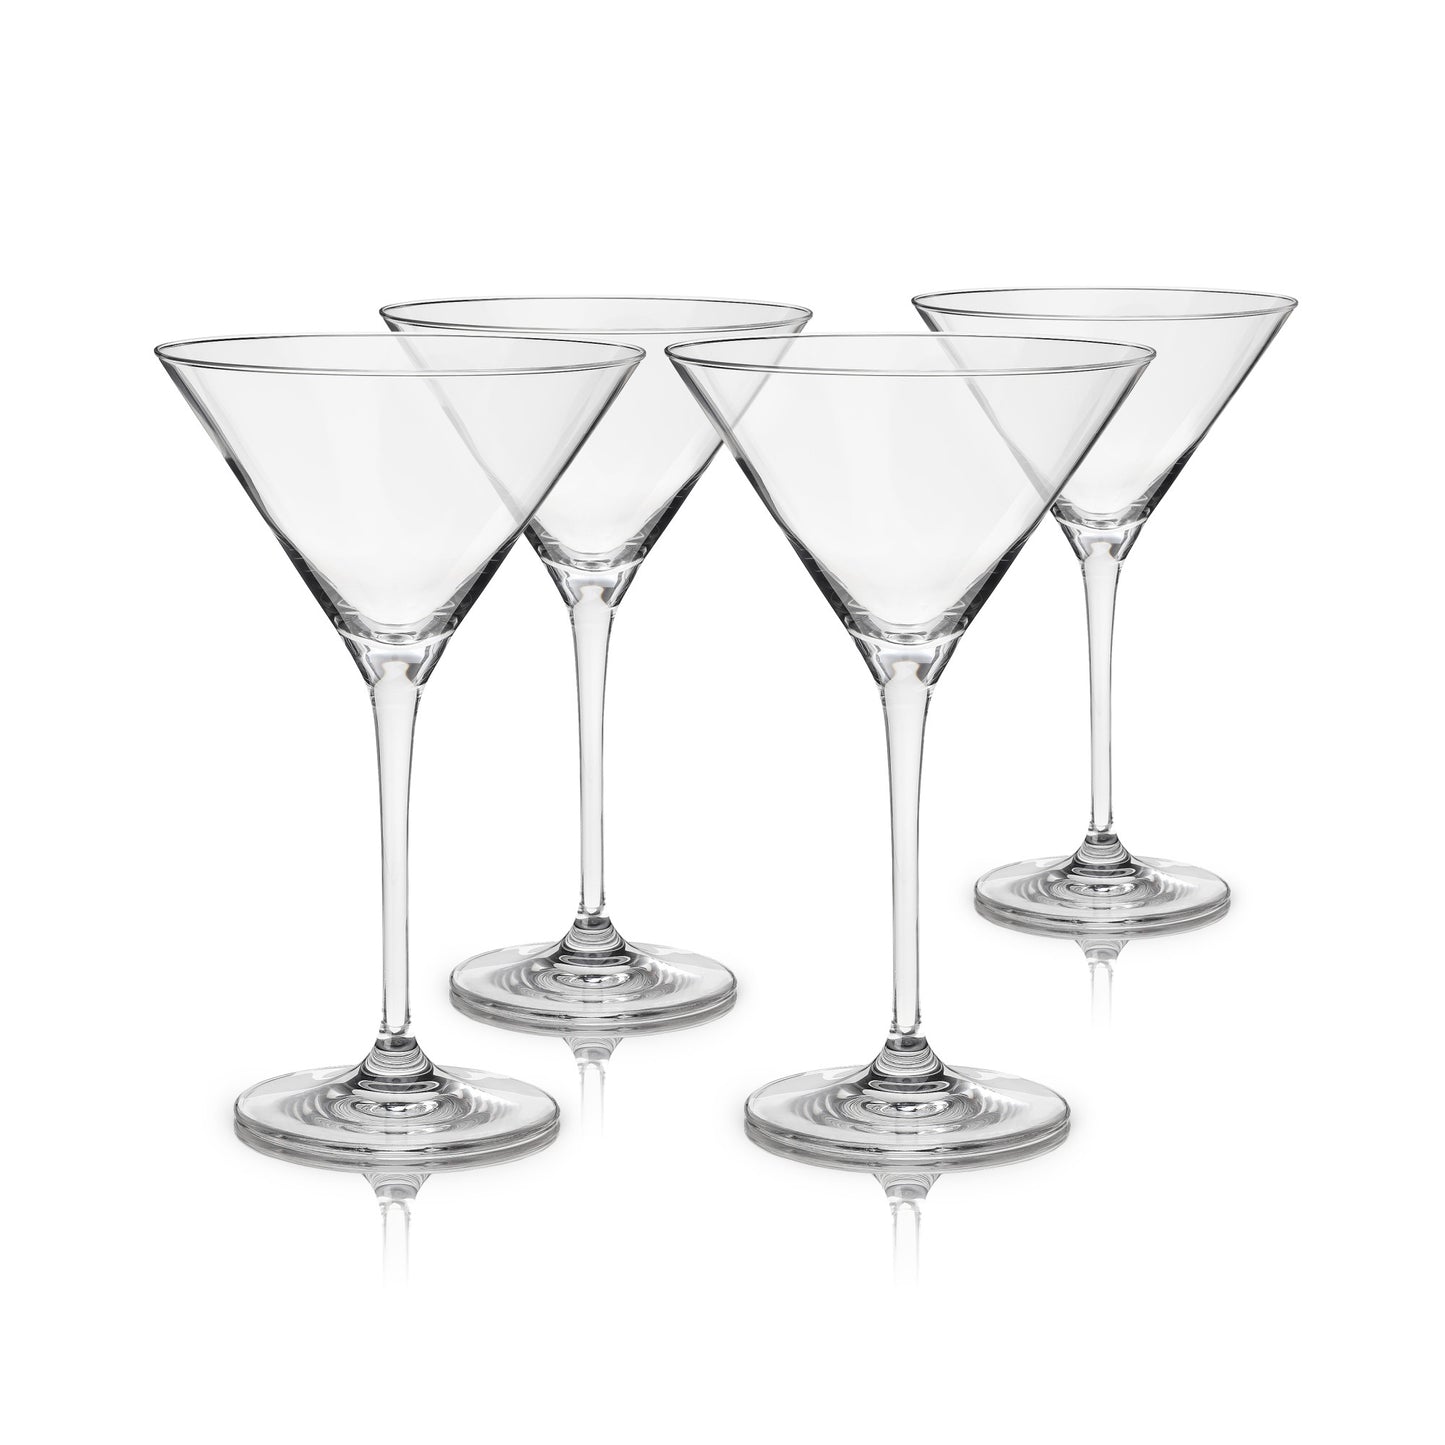 Reserve Milo Crystal Martini Glasses By Viski (set of 4)